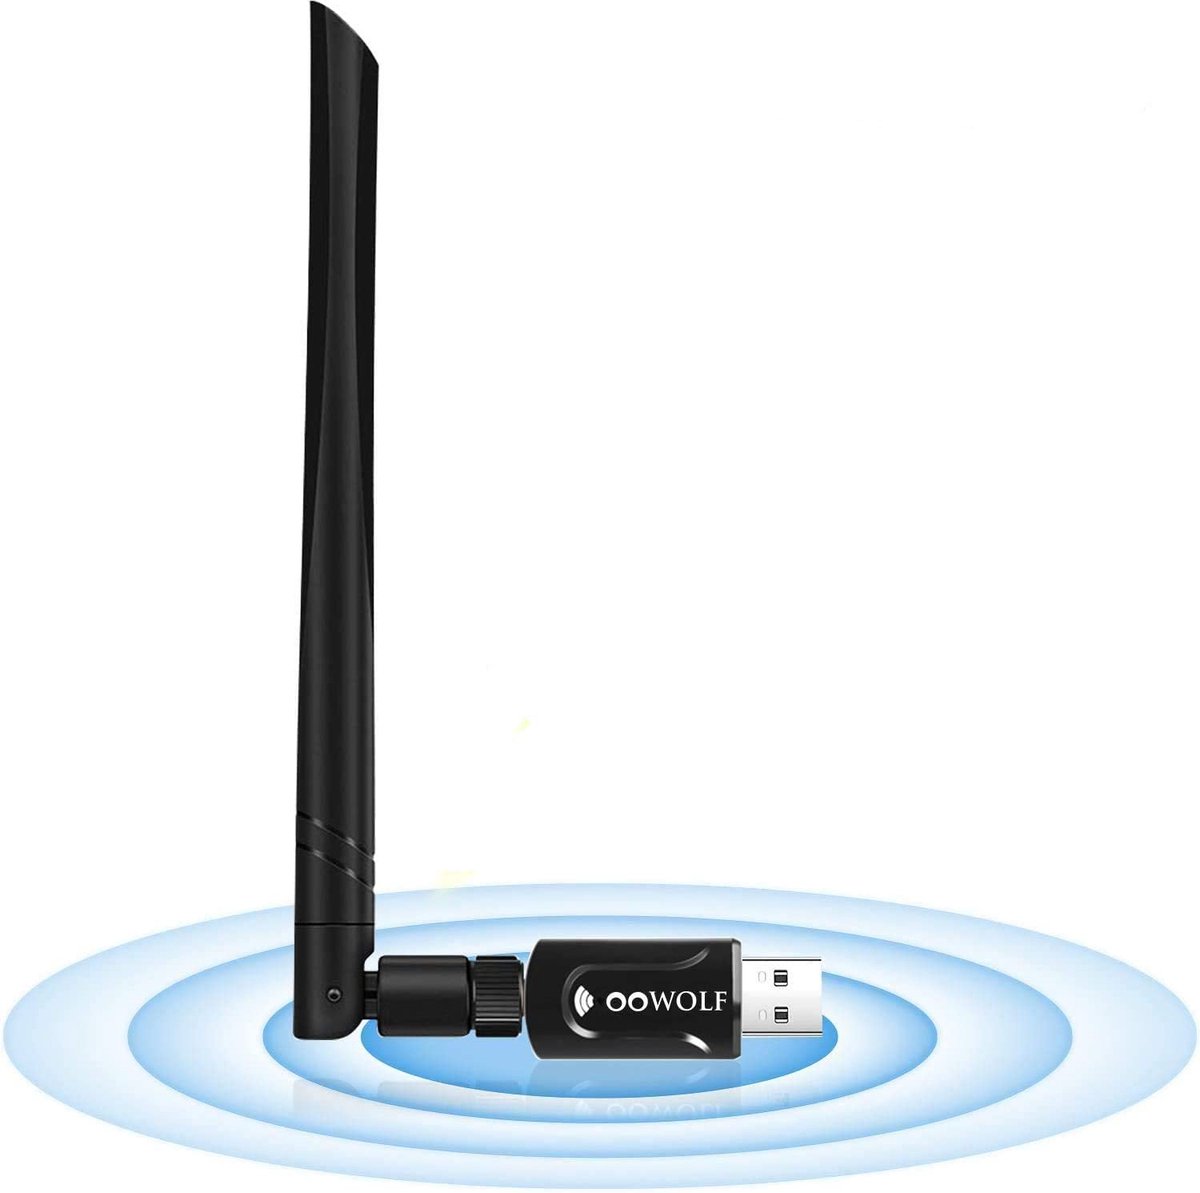 Wifi Adapter | OOWOLF - Windows 10/Vista/7/8/8.1/XP, Mac OS X 10.6-10.14